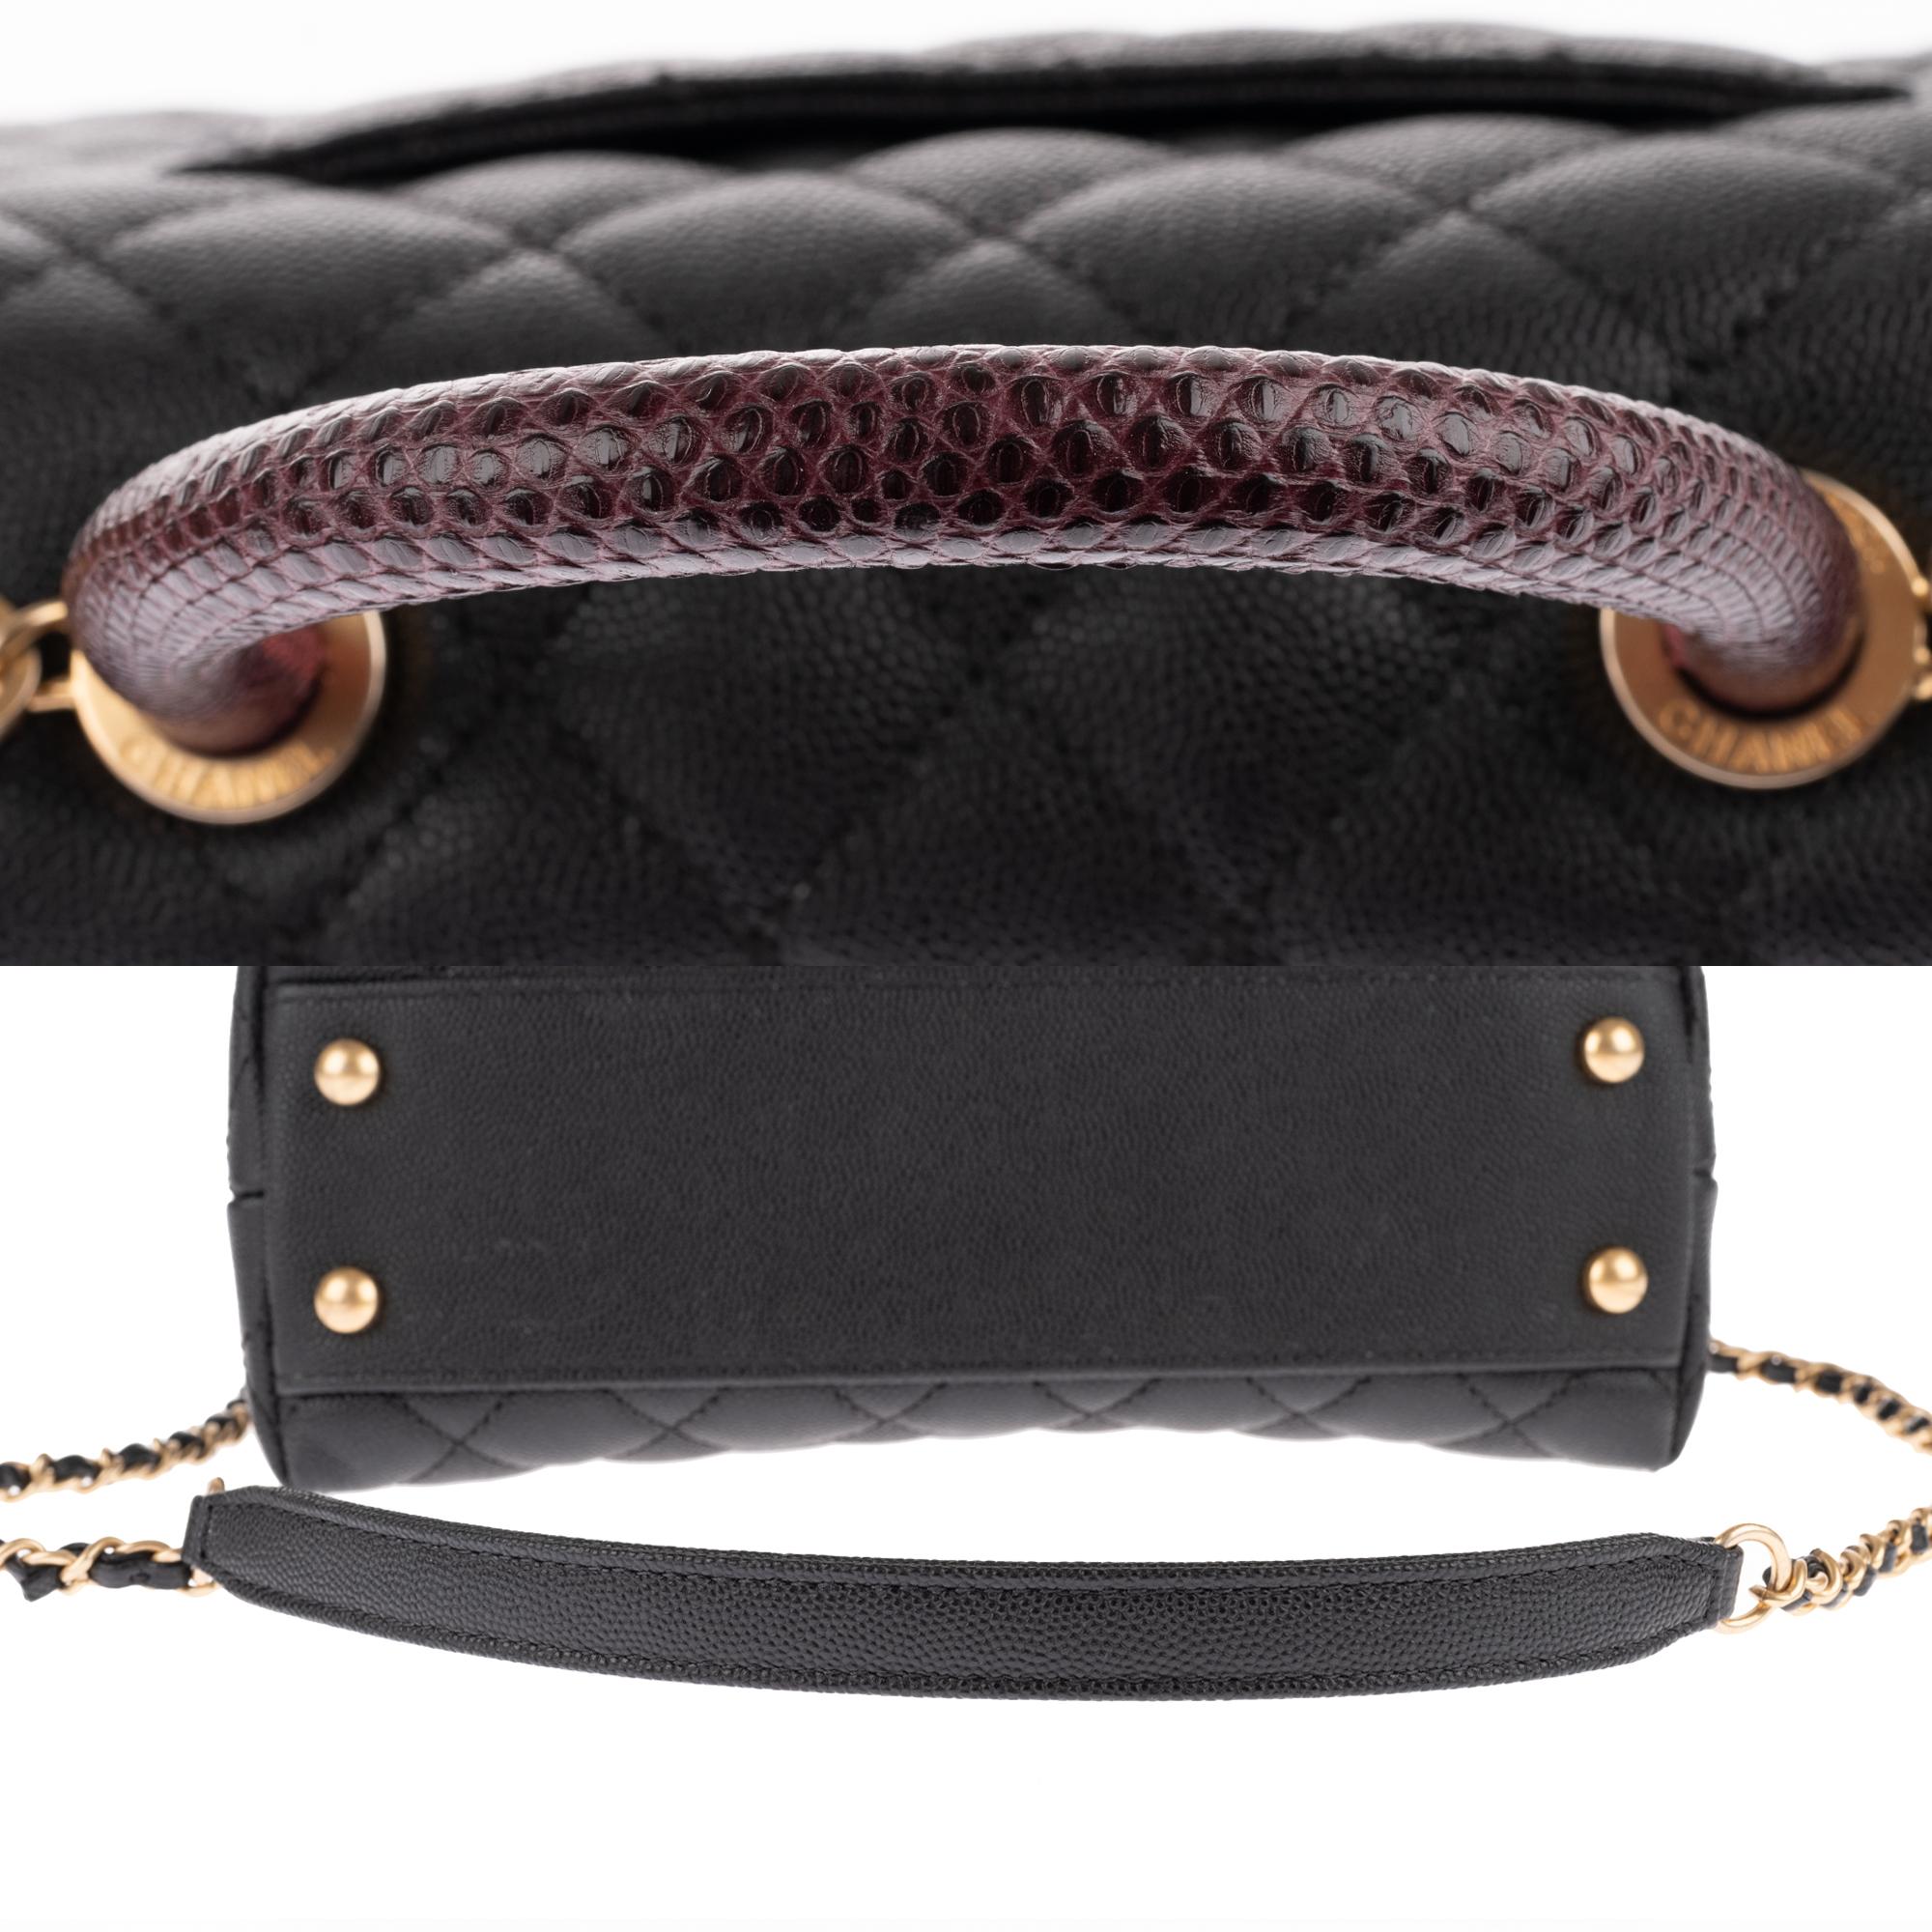 Amazing Chanel Coco handbag in black caviar leather, handle in brown lizard ! 1